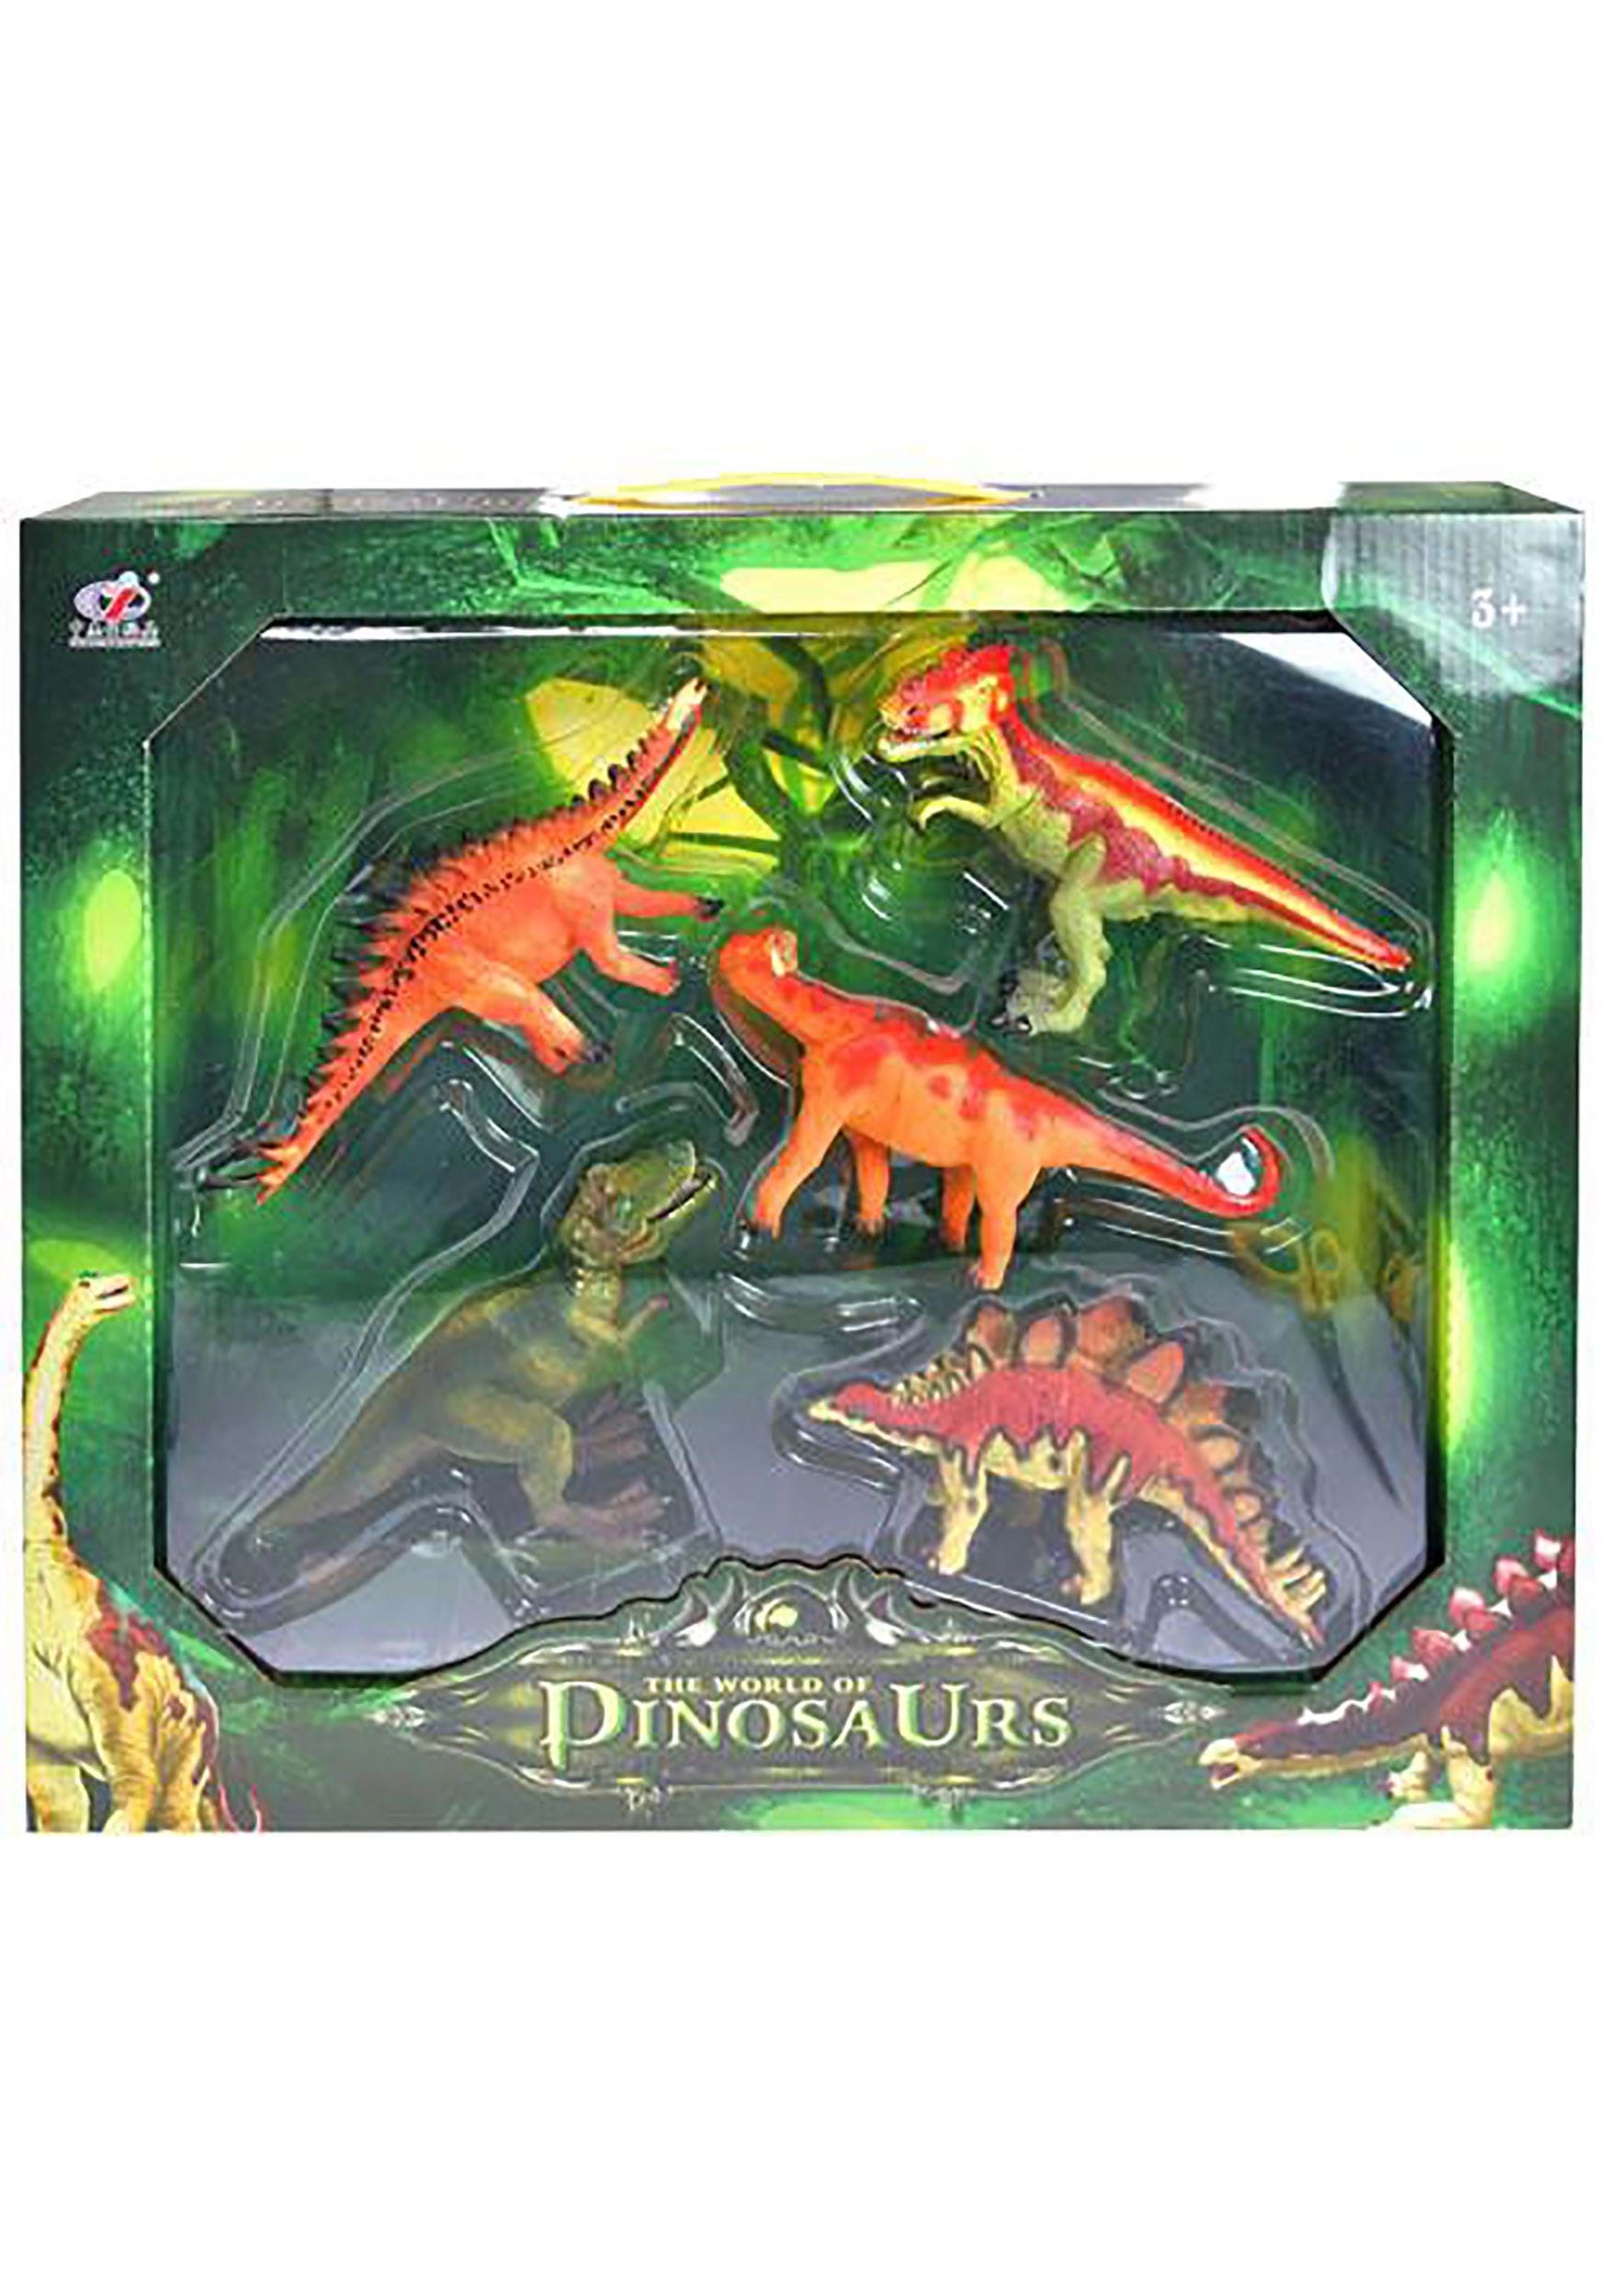 5 pack Dinosaur Figure Box